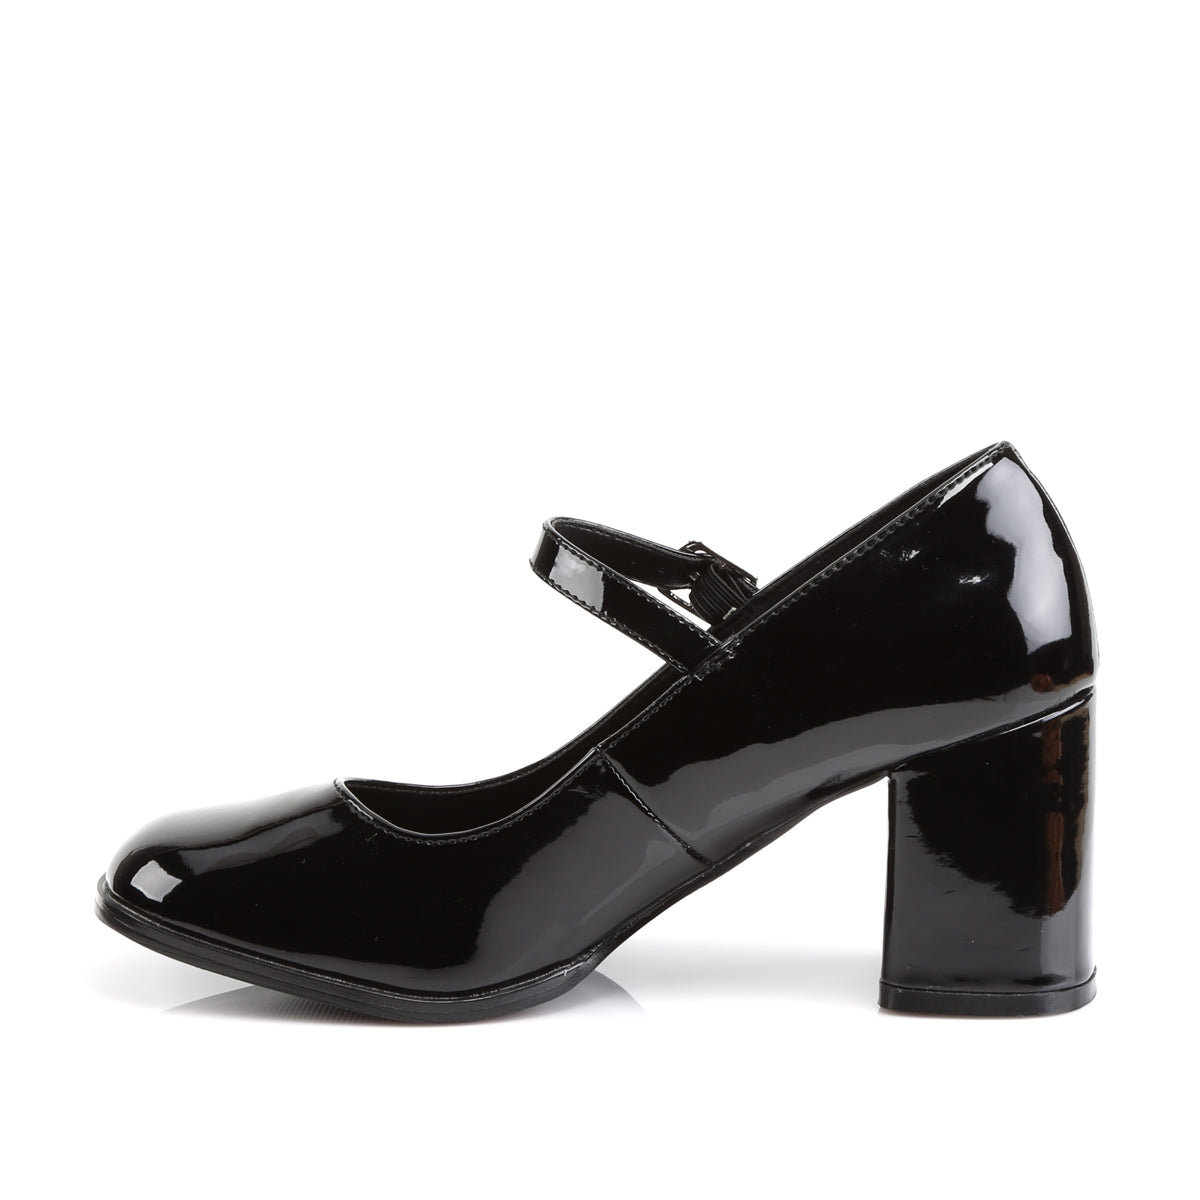 GOGO-50 - Black Patent Mary Jane Heels - A Shoe Addiction Australia